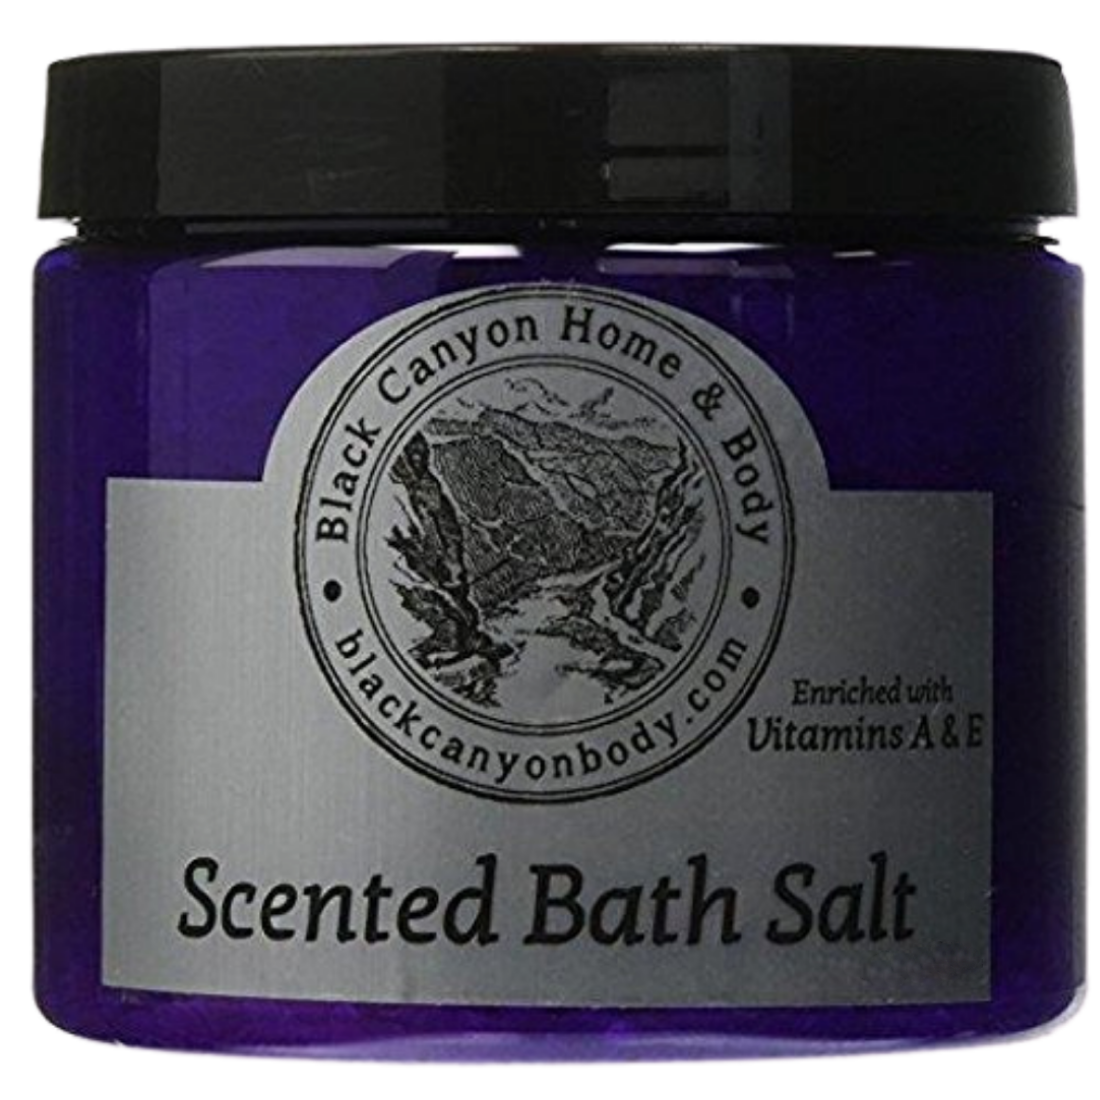 Black Canyon Butt Naked Scented Sea Salt Bath Soak